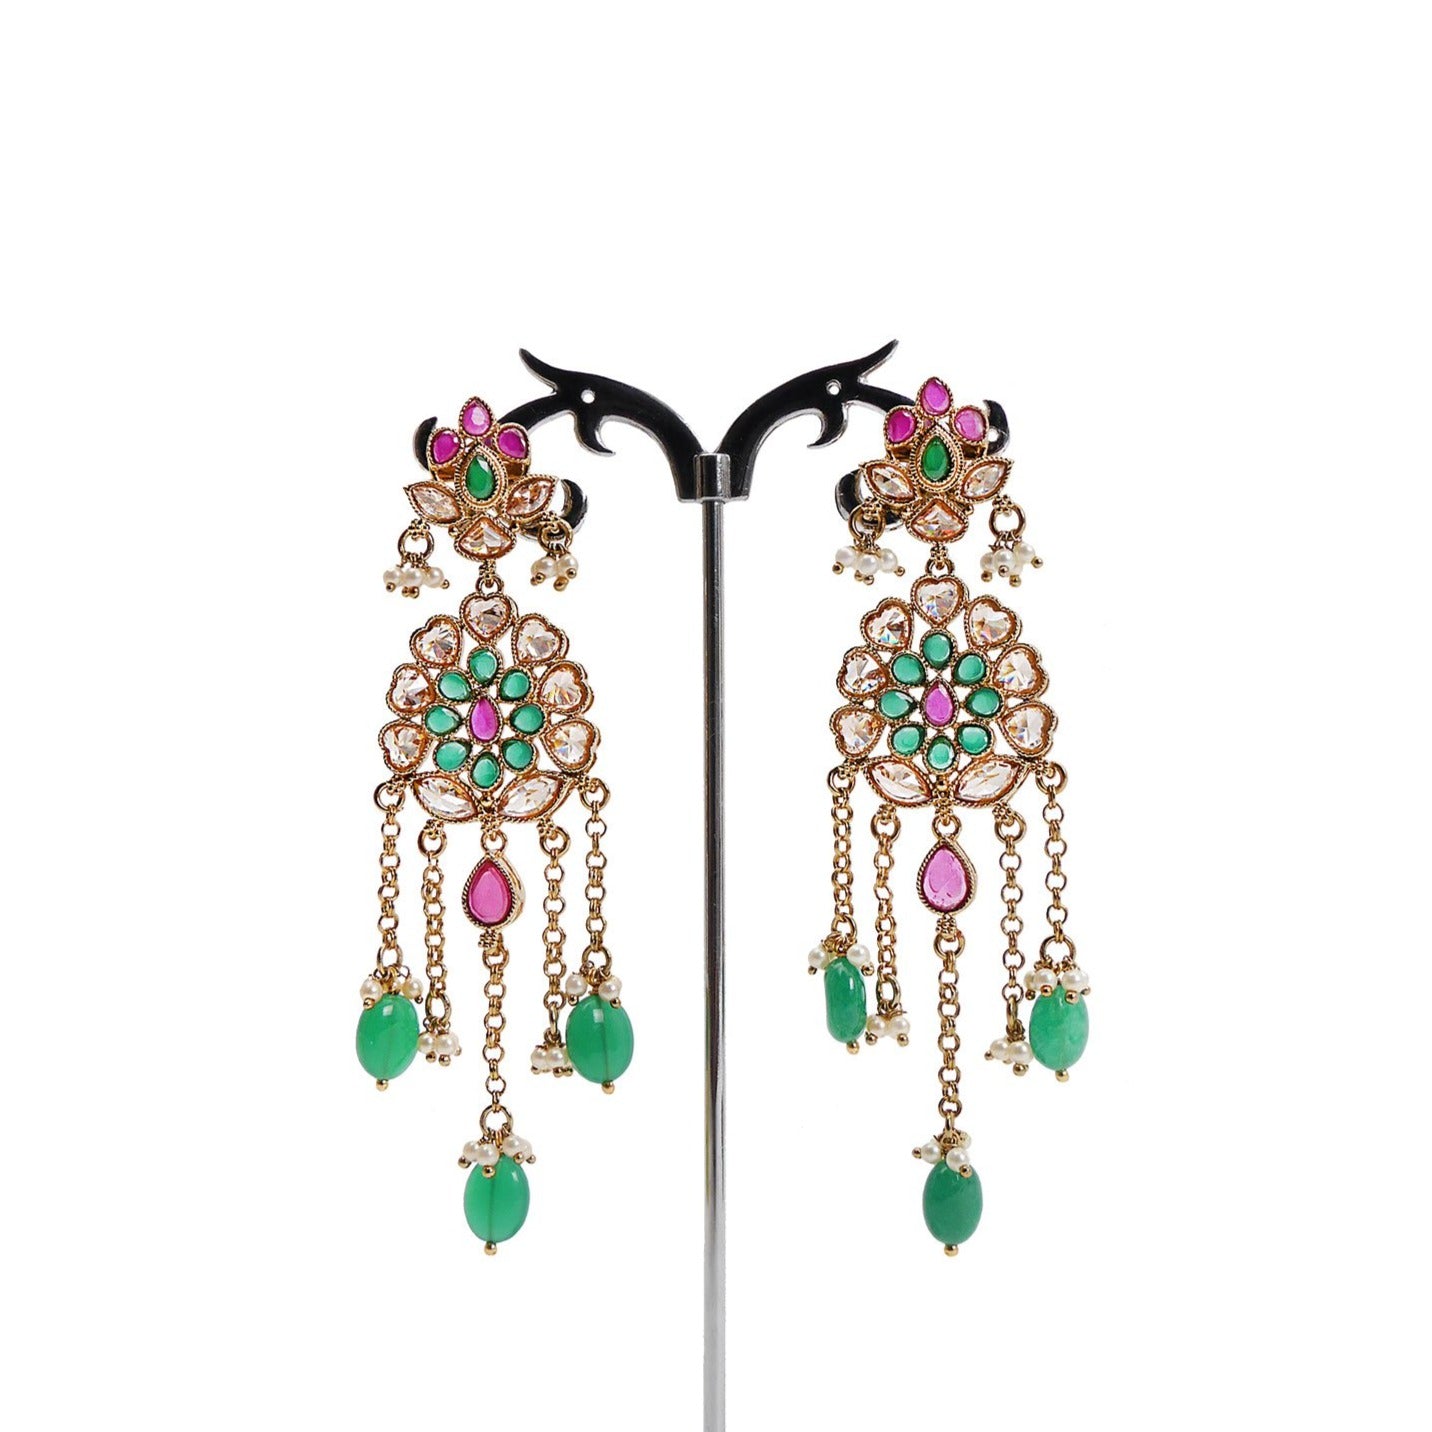 Aparna Long Earrings in Ruby and Emerald